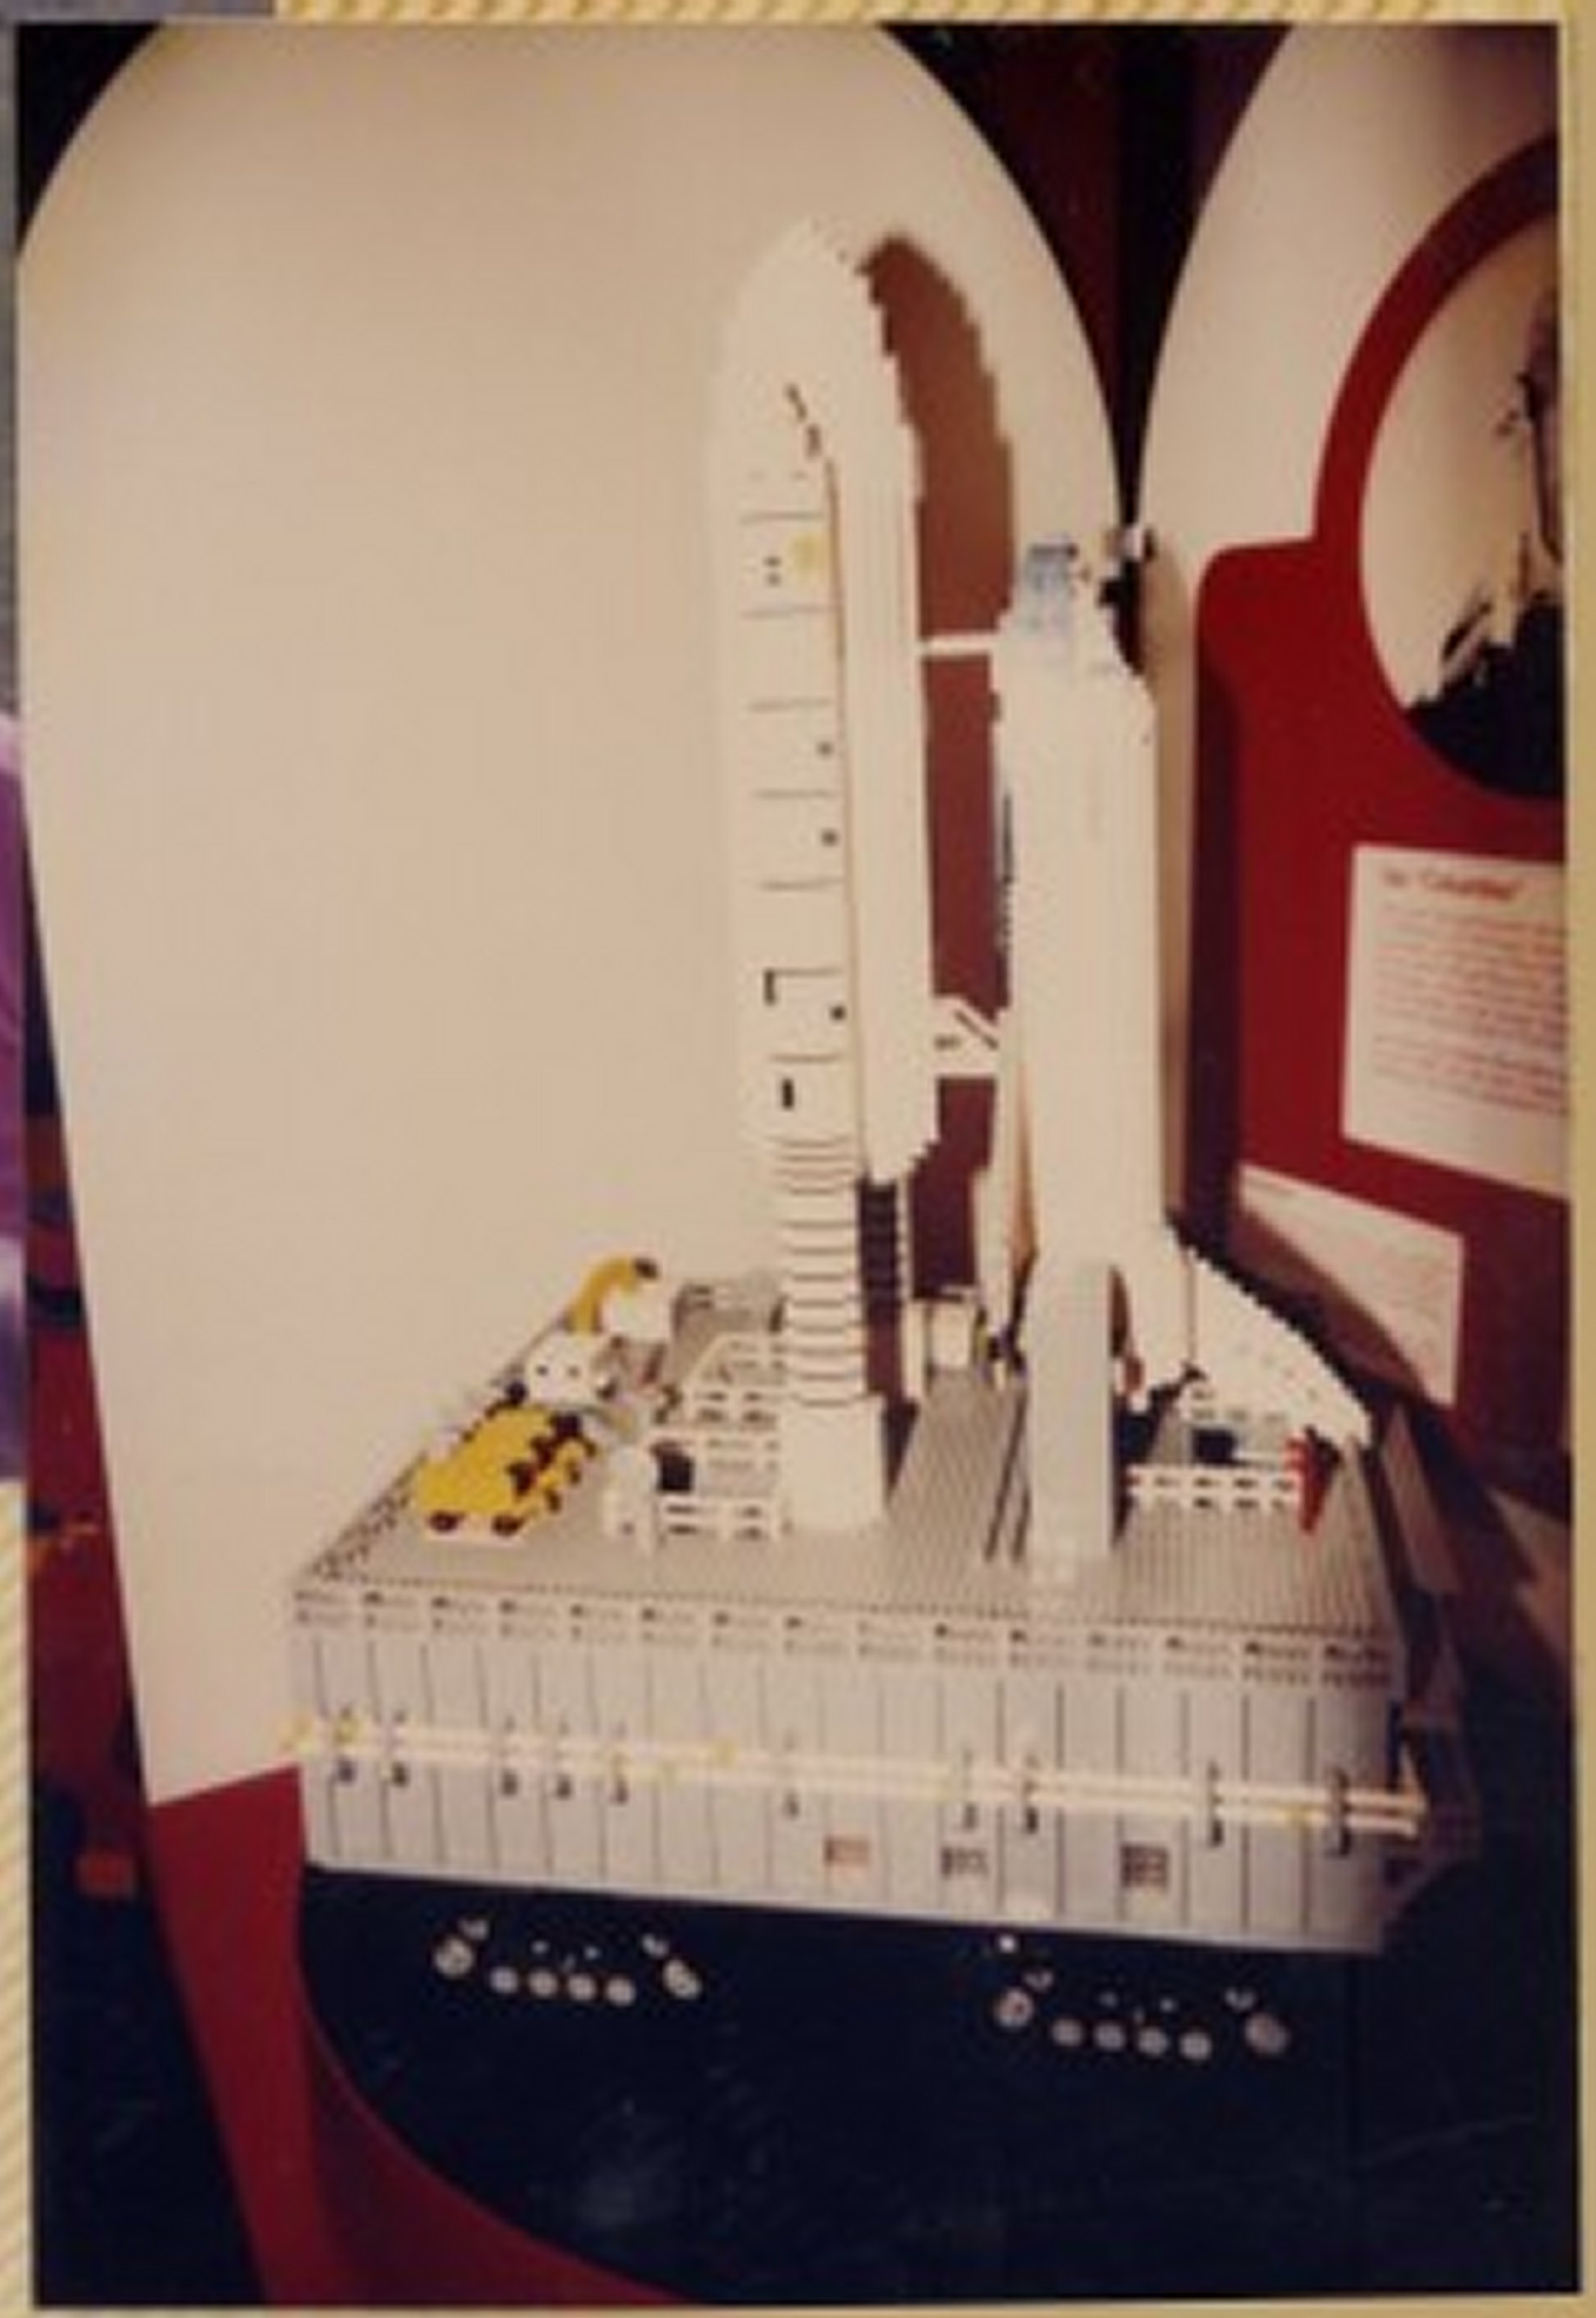 LegoLand_02_1984.jpg